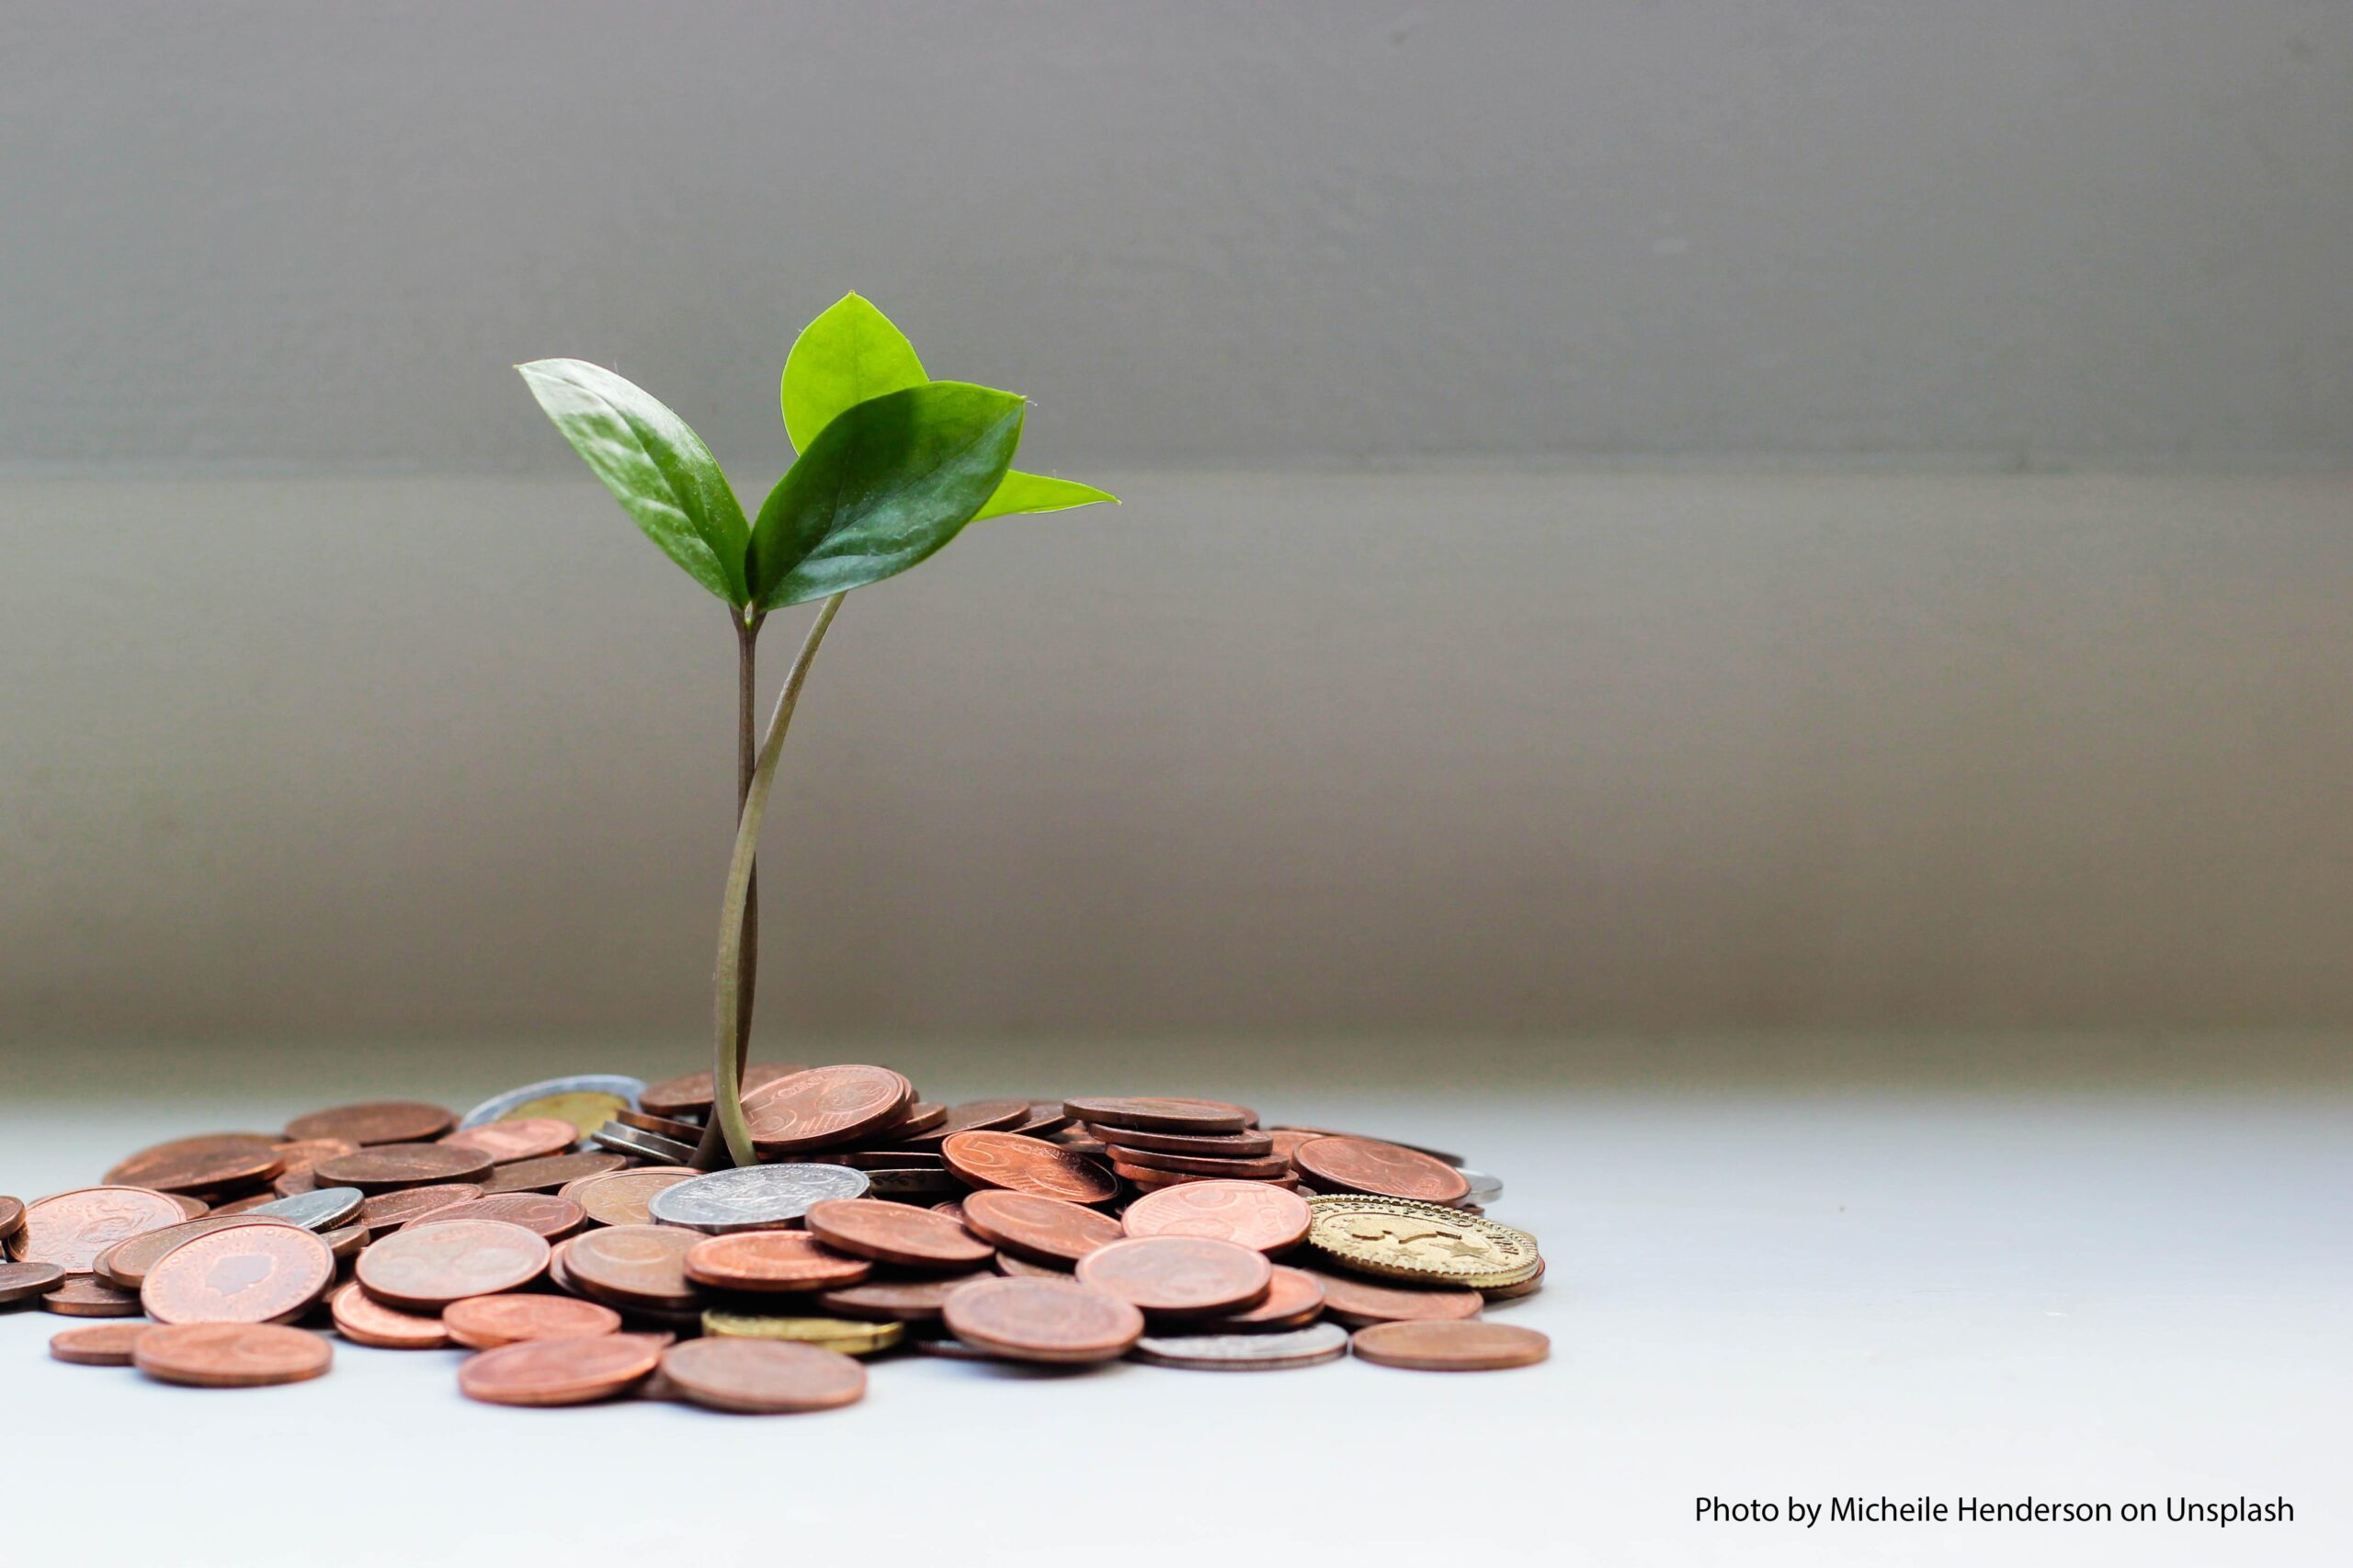 Show Me the Money: How to Fund Entrepreneurship Ecosystem Building Initiatives